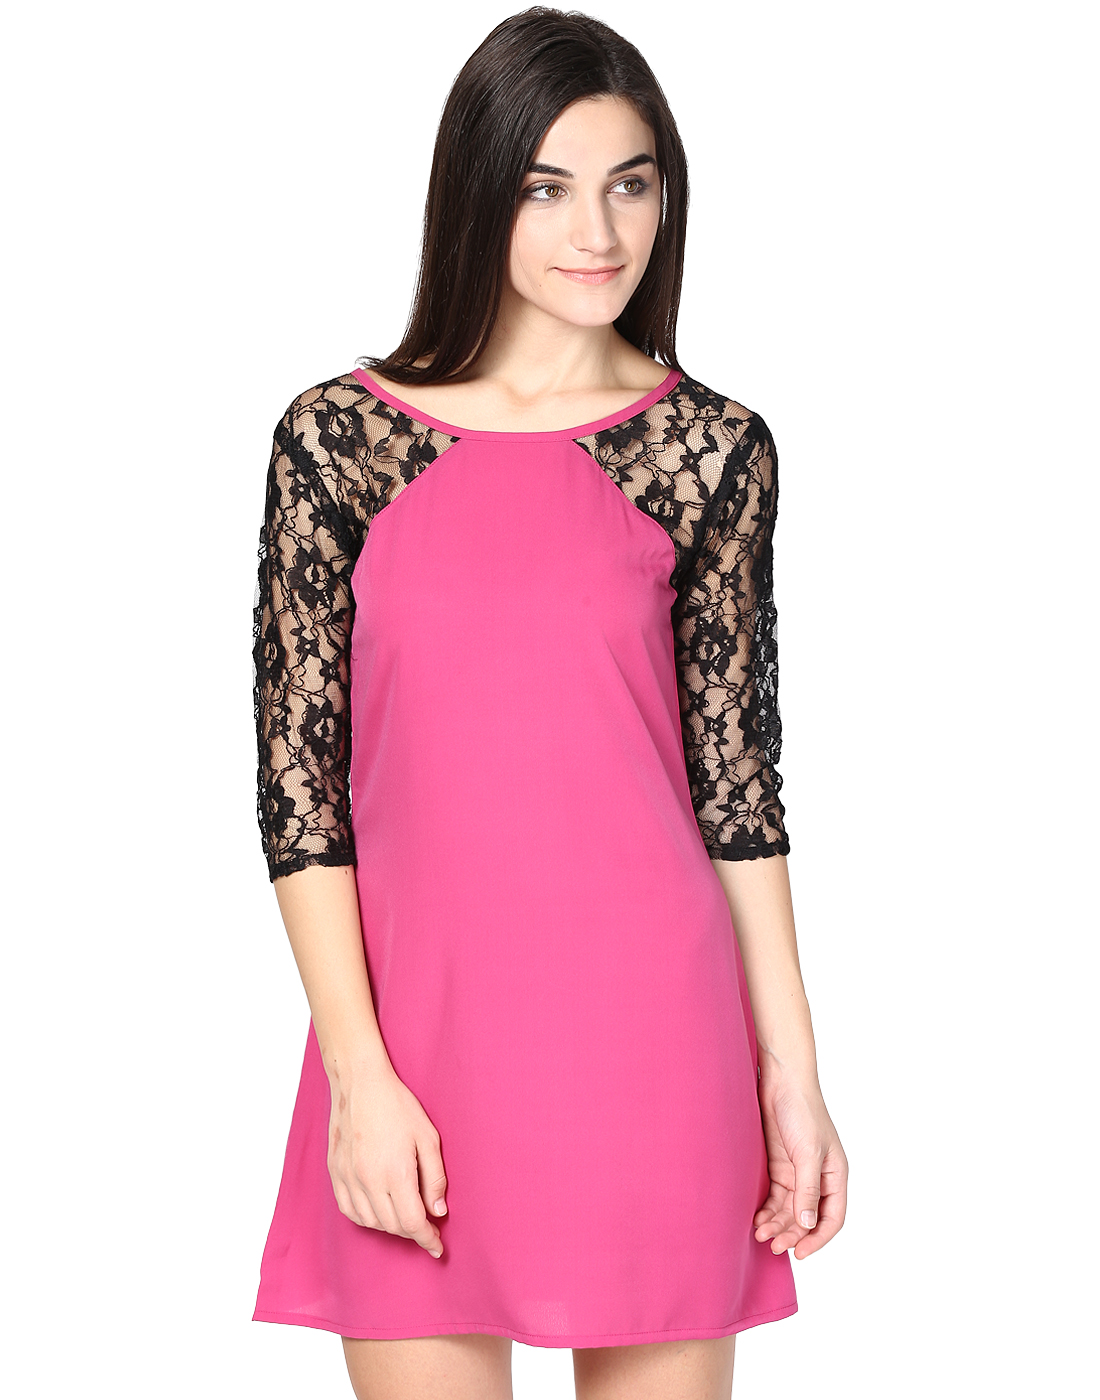 Buy Abiti Bella Women's Pink Reglan dress with Black sleeves Online ...